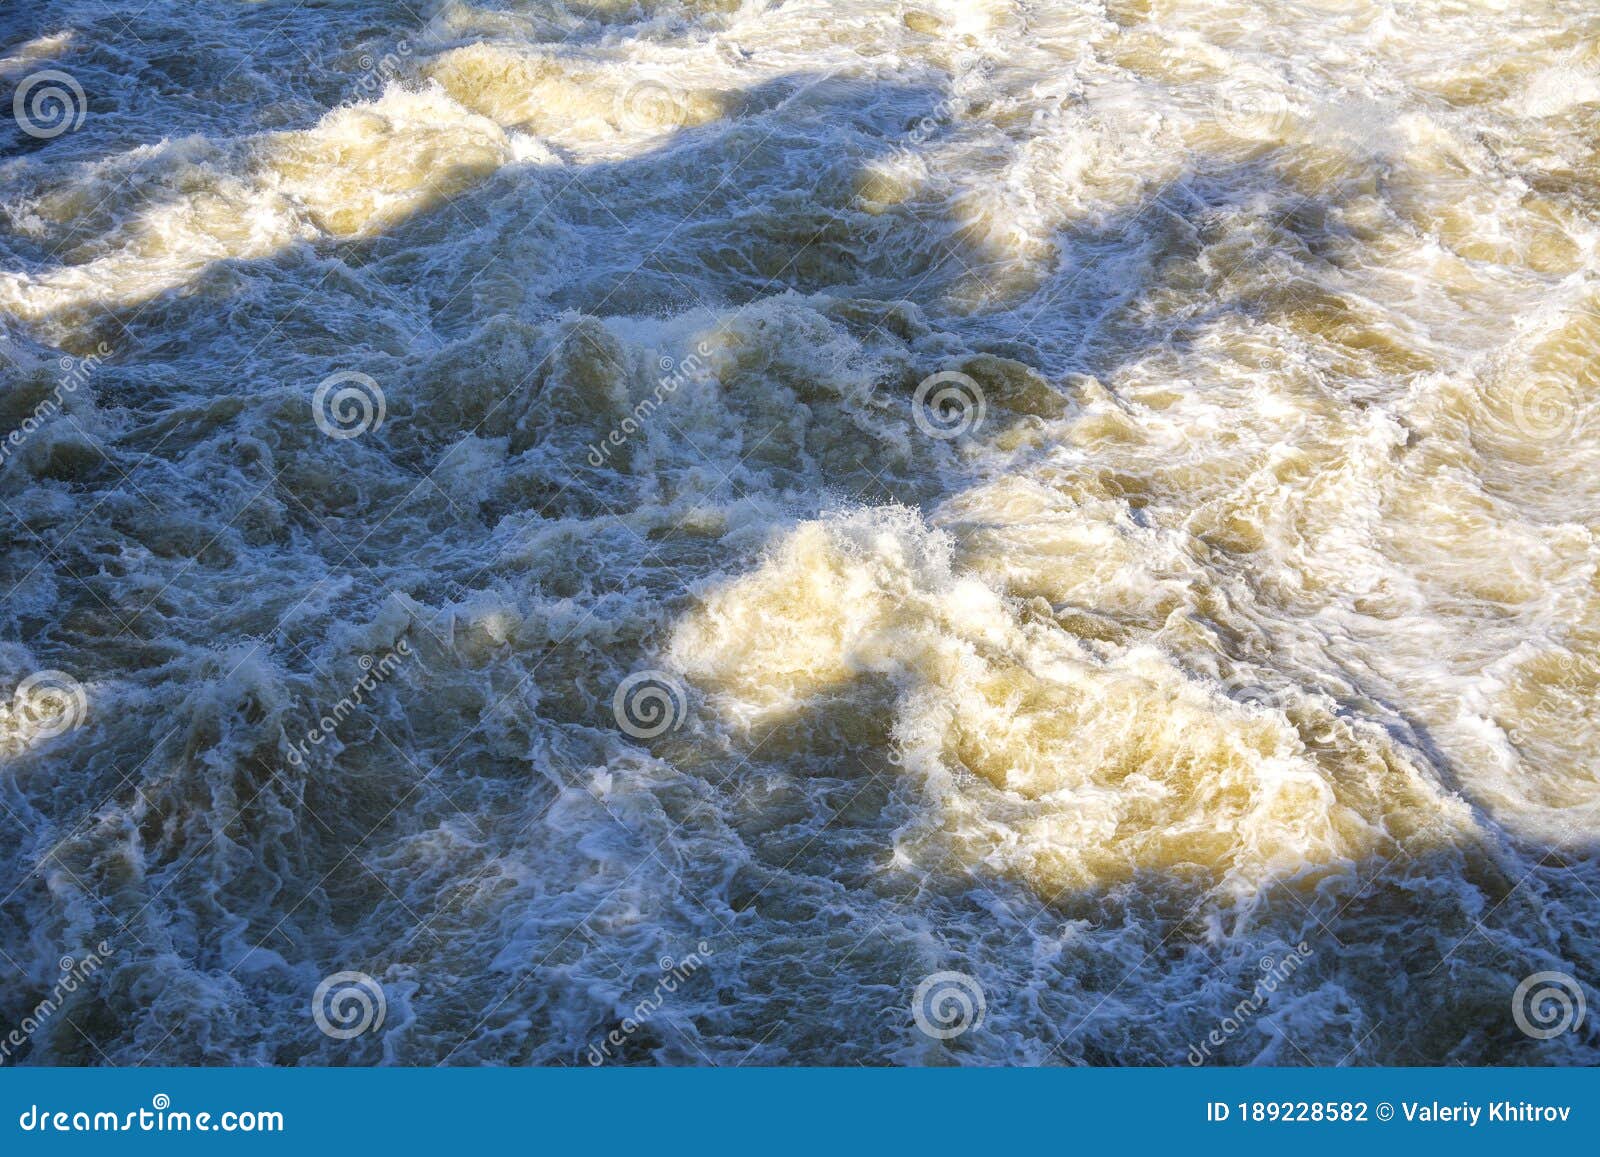 water stream of imatrankoski rapid the imatra rapid, vuoksi river